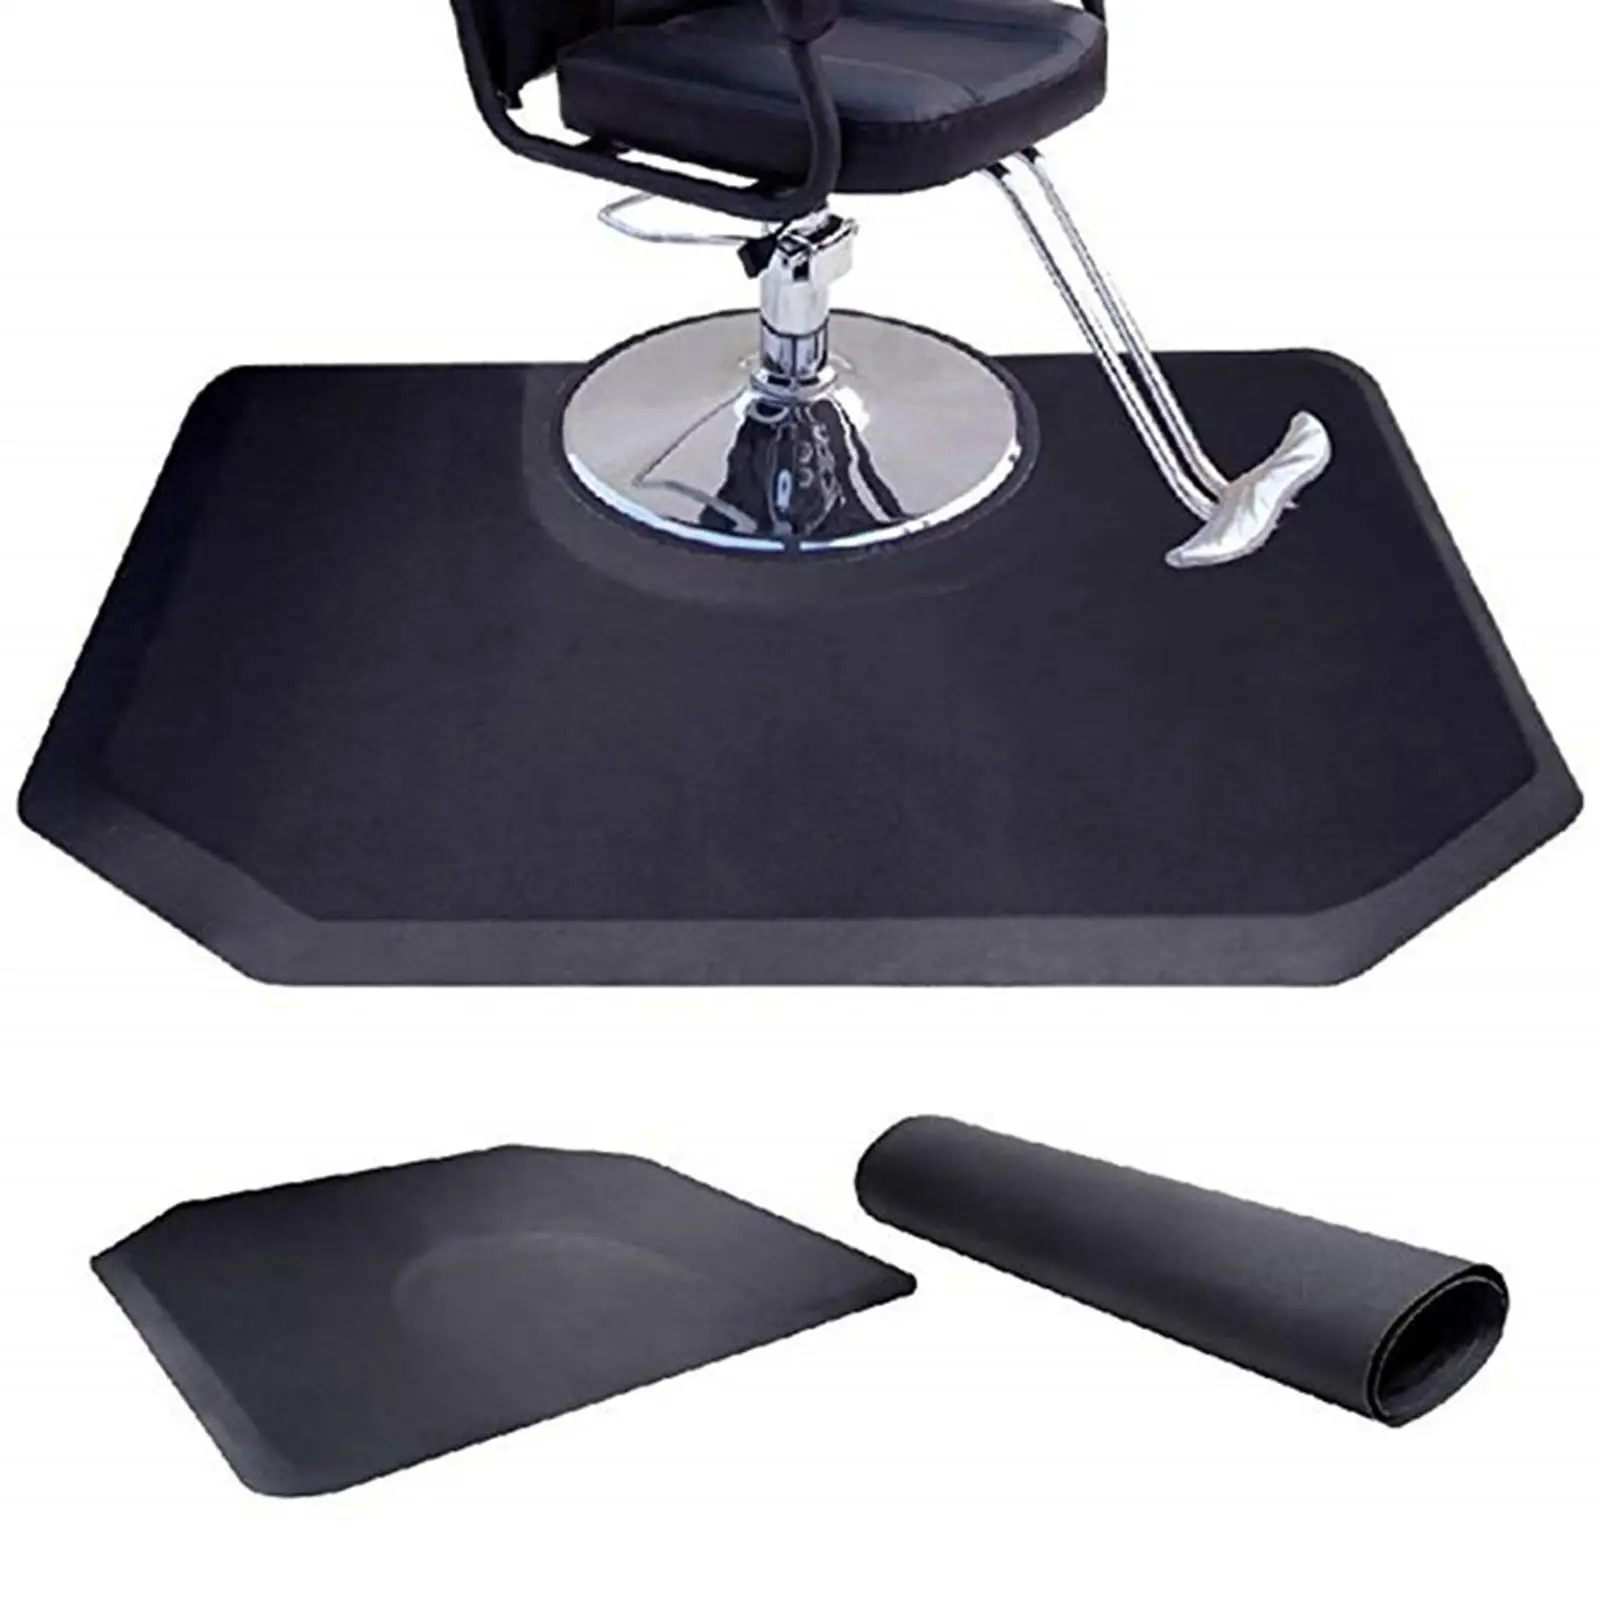 Barber Anti Fatigue Floor Mat Waterproof Salon Floor Mat Non Slip Pad Chair Cushion for Hairstylist Standing Barber Shop Kitchen